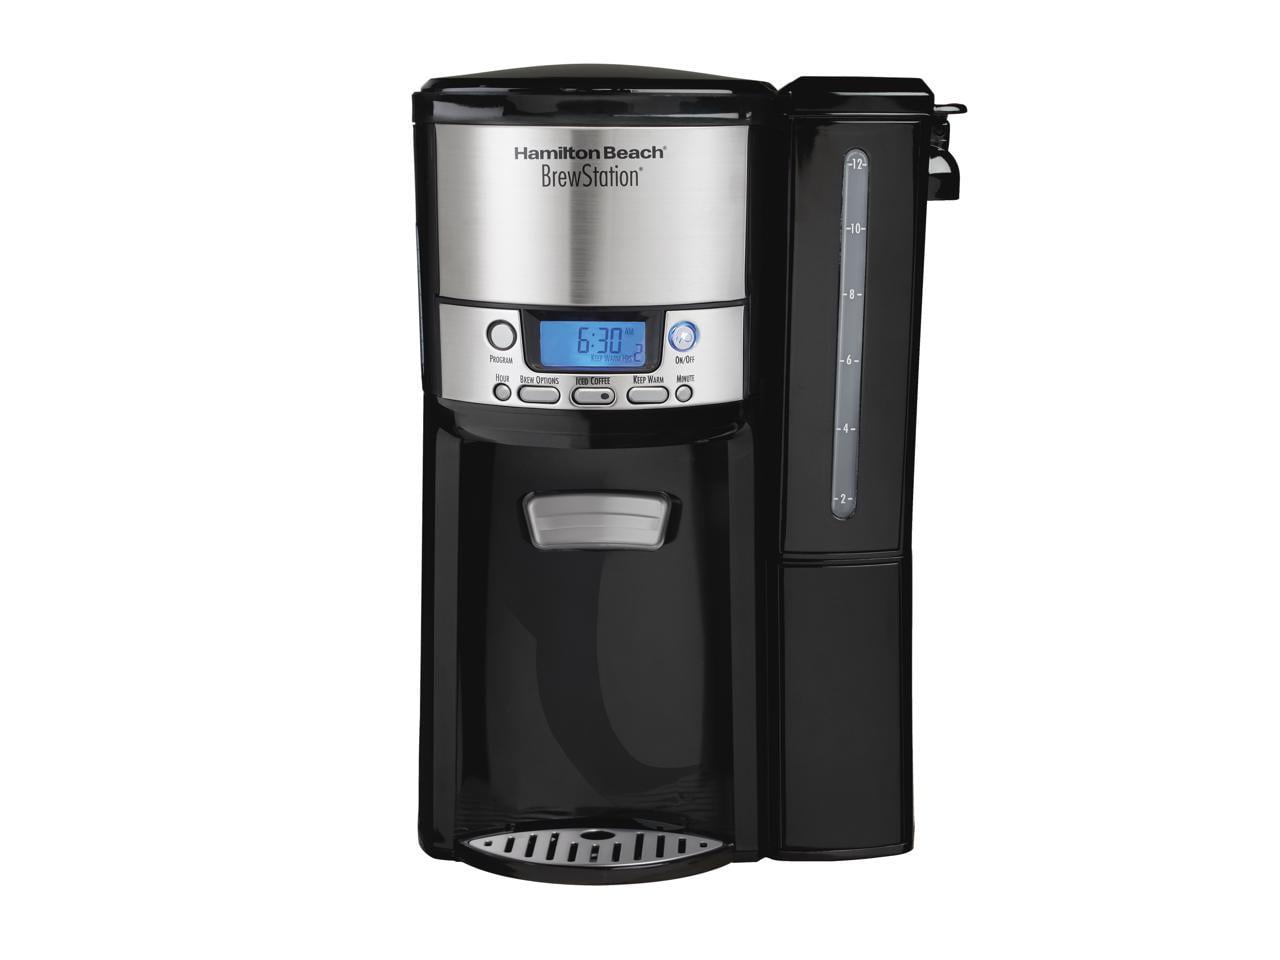 Hamilton Beach BrewStation 12 Cup Coffee Maker with Internal Heating, Black